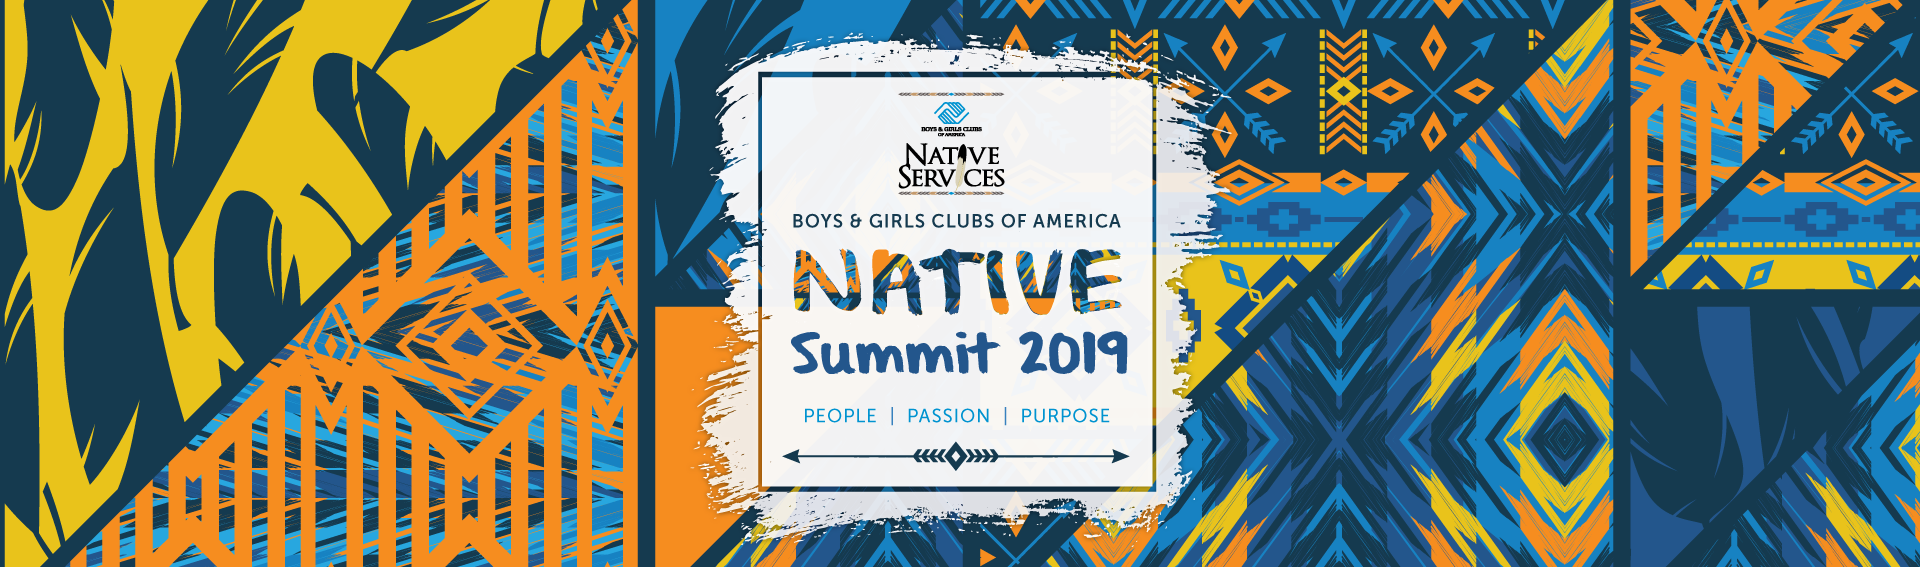 2019 Native Summit